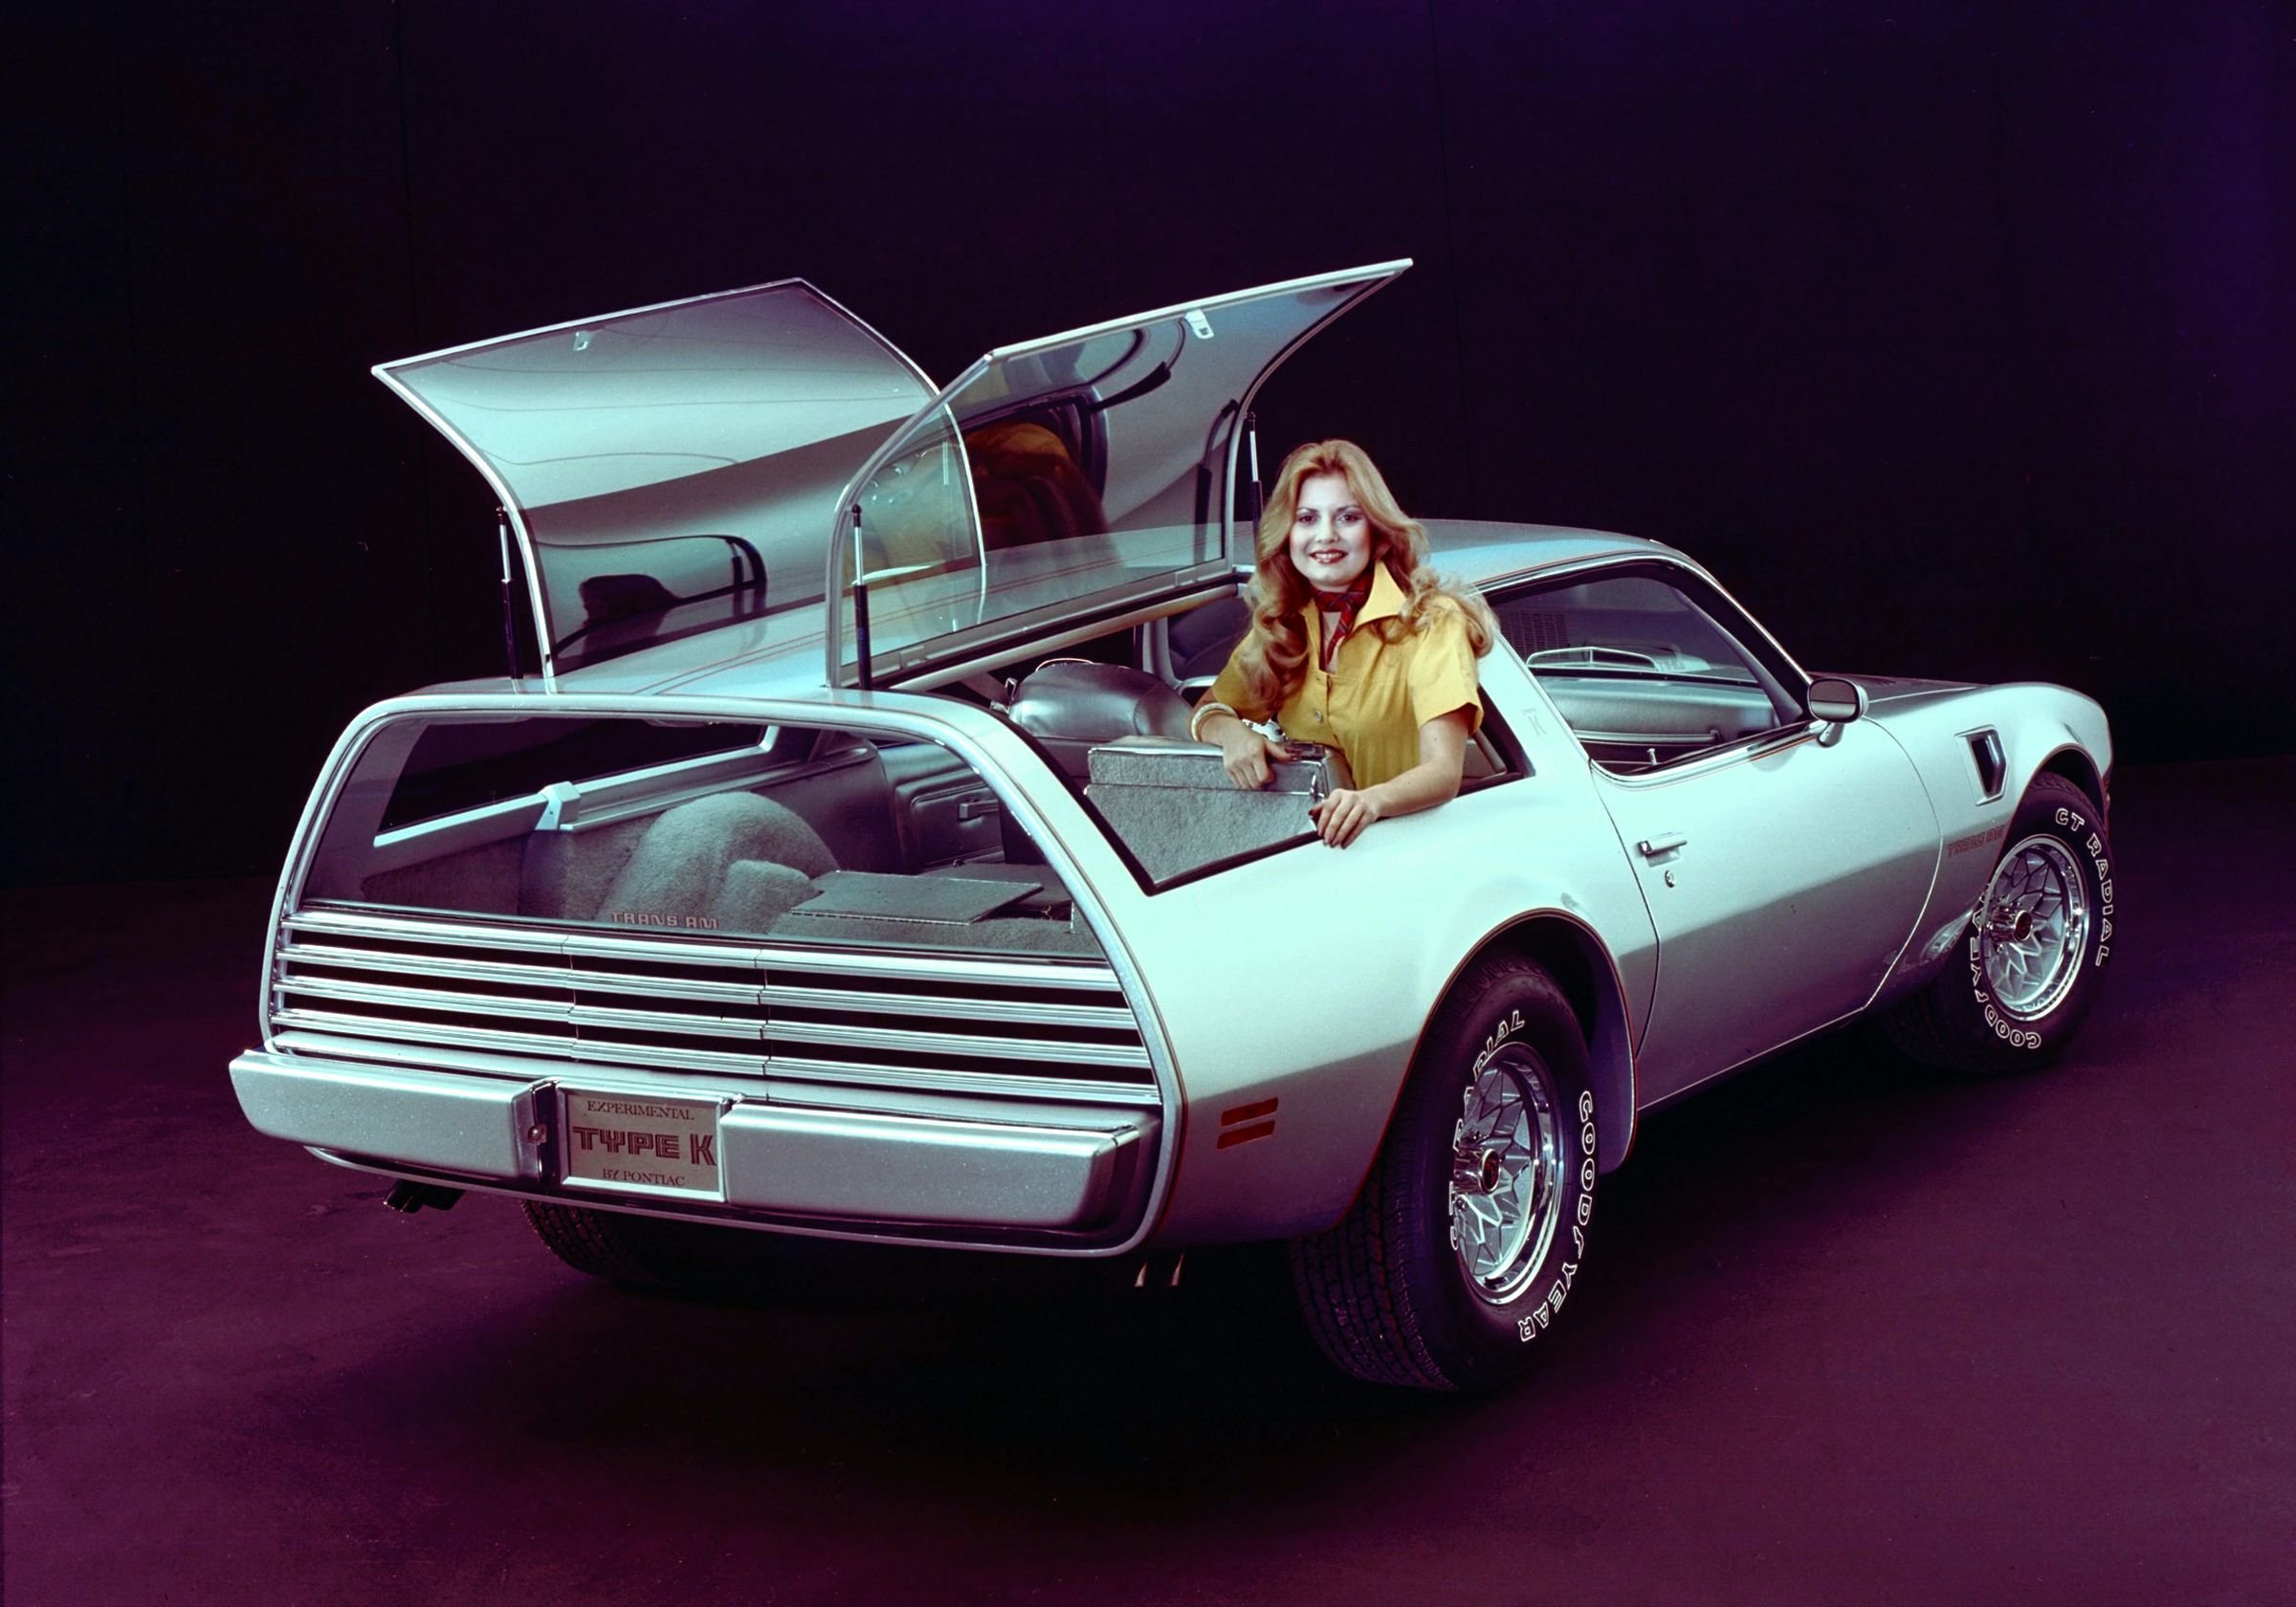 Купить машину на века. Понтиак 80. Pontiac 80s. Понтиак 1977. Pontiac Kammback Type k 1977.